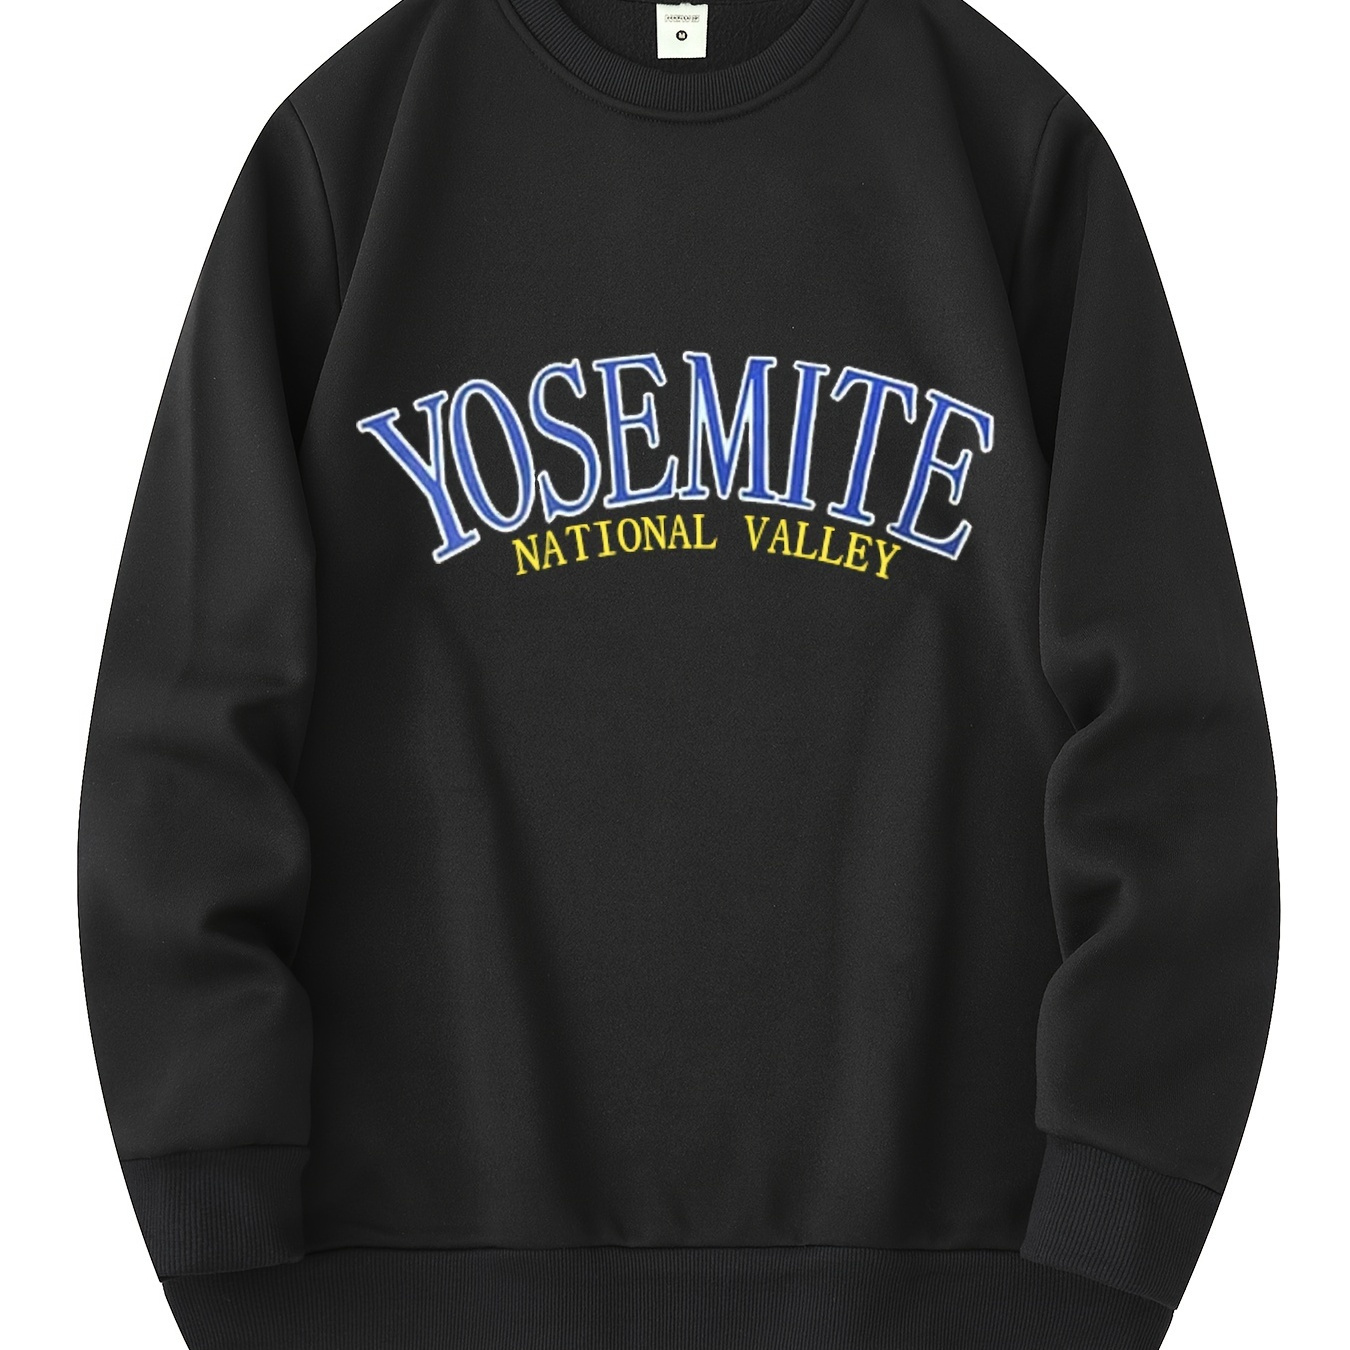 

Yosemite Letter Print Men's Long Sleeve Crew Neck Sweatshirt, Pullover Sweatshirt, Casual Sports Versatile Top For Spring & Autumn